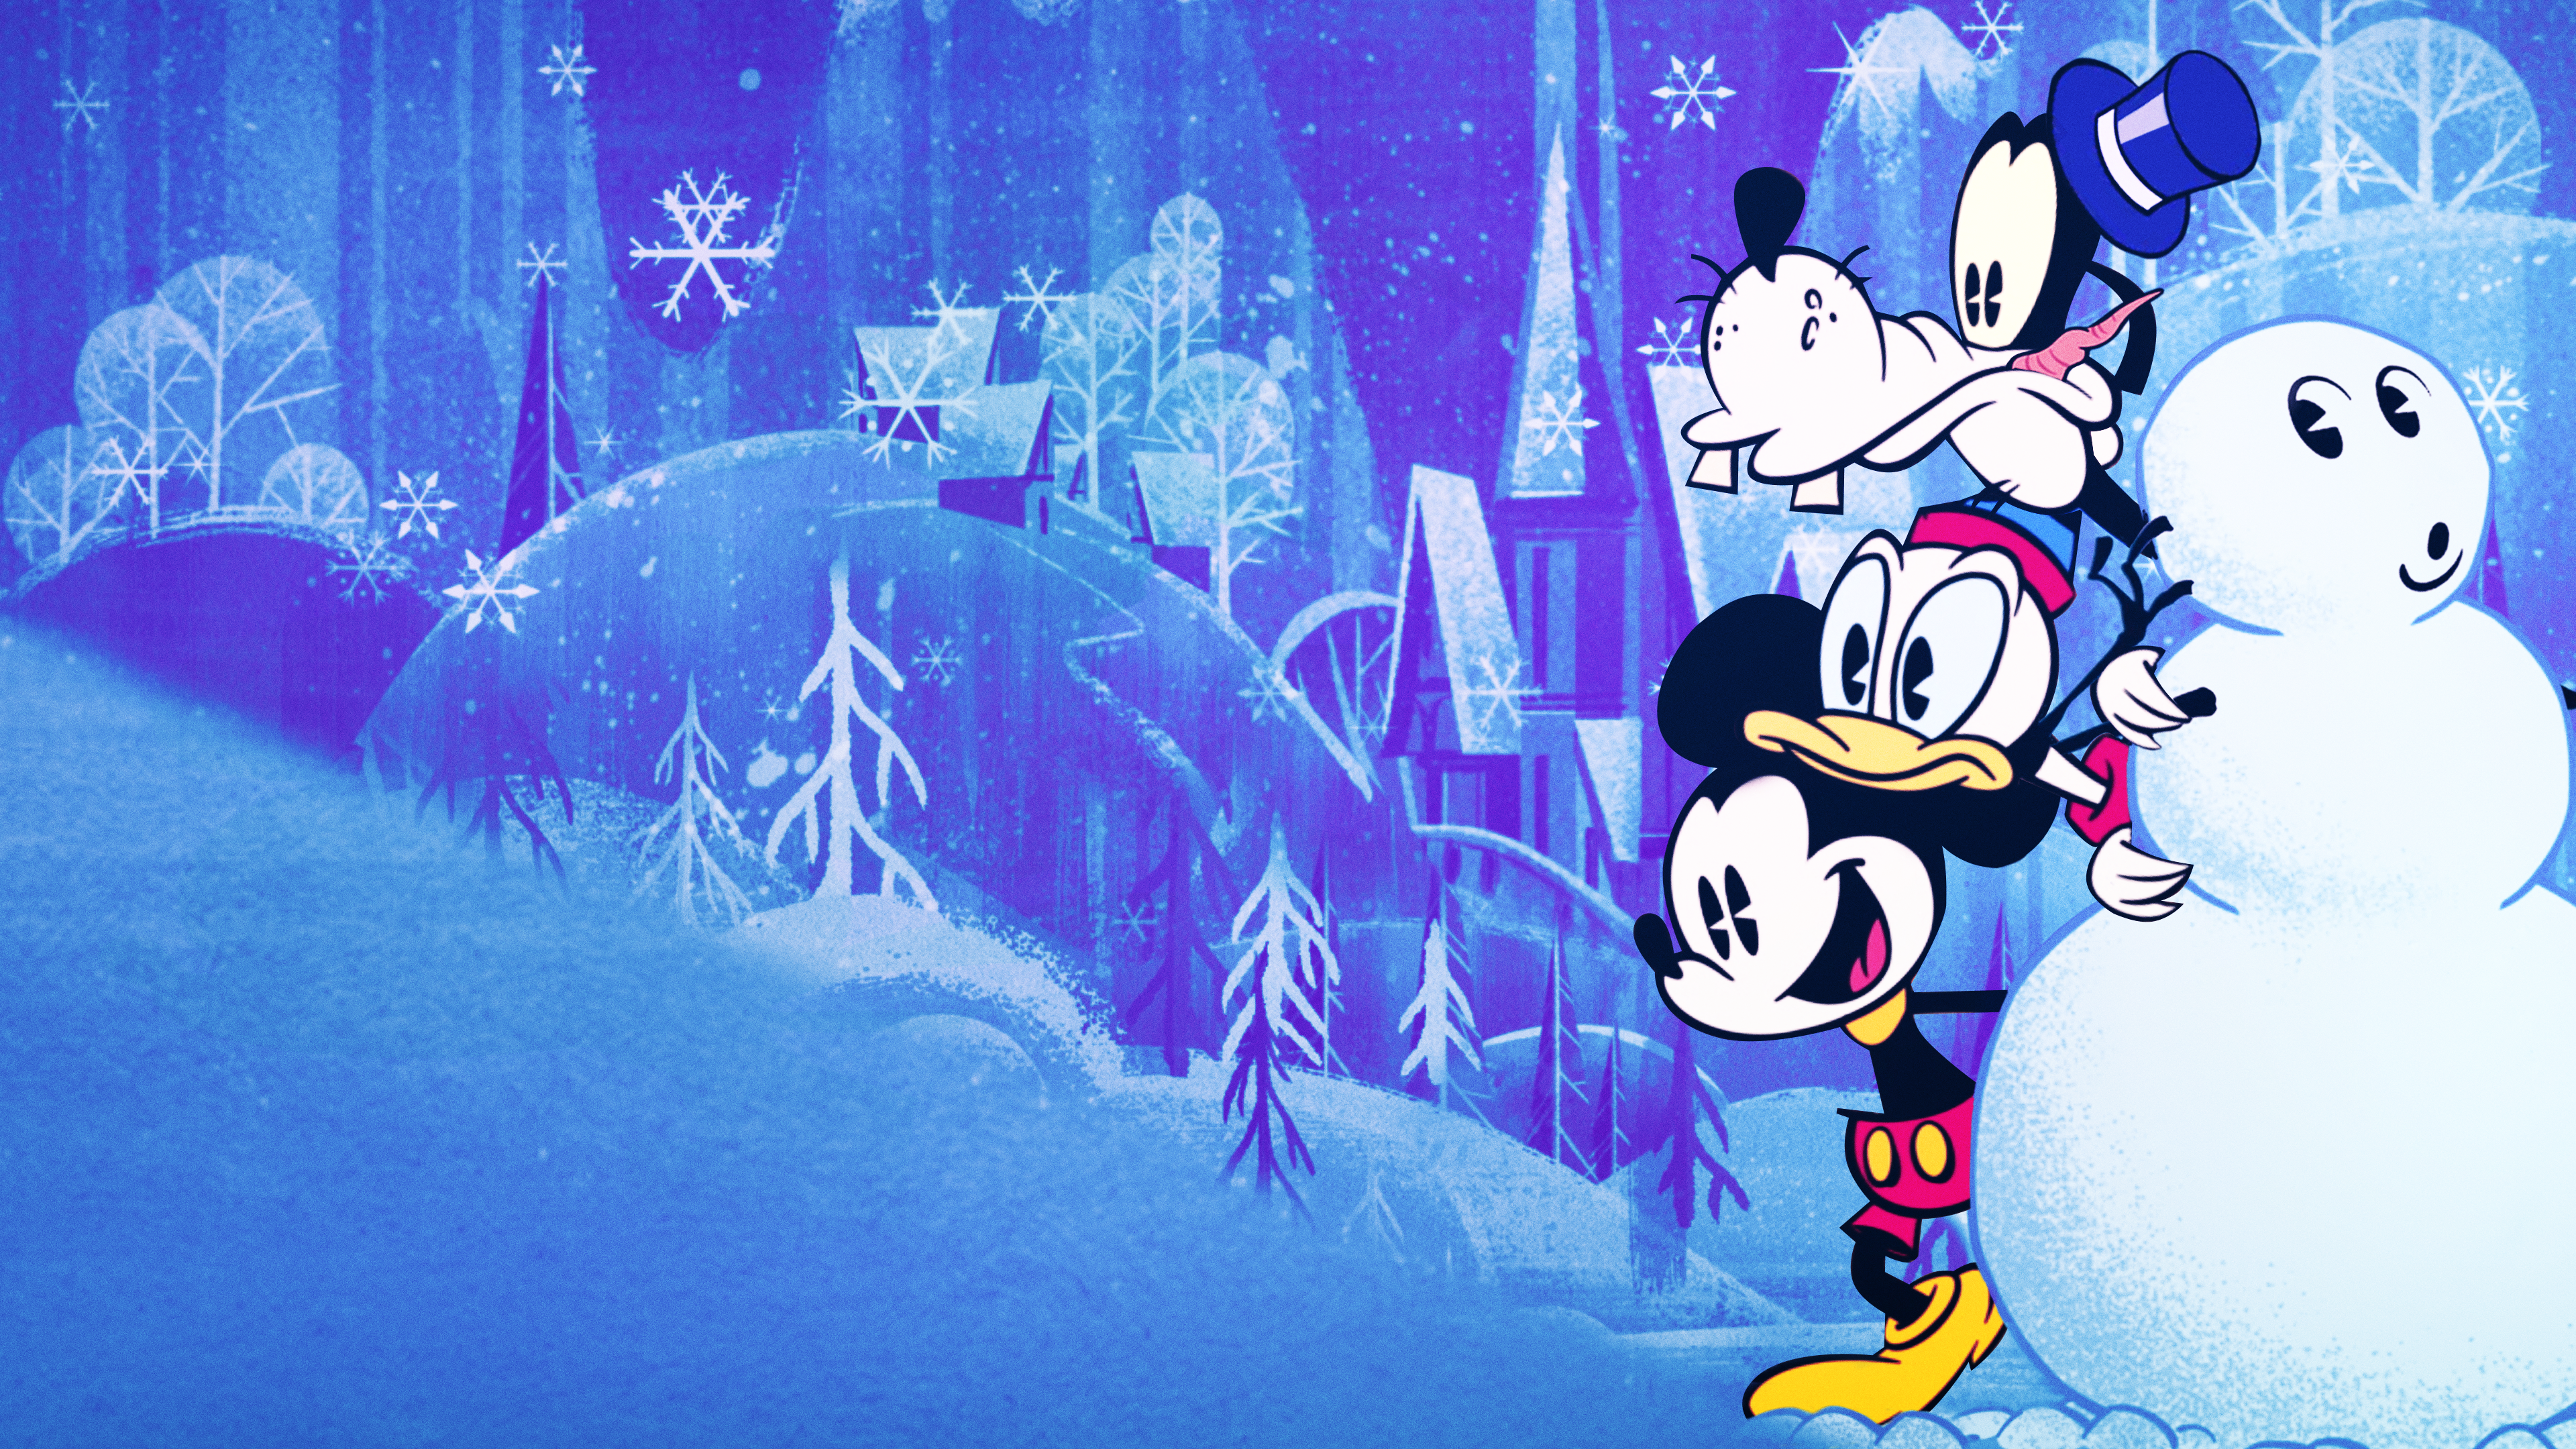 O Maravilhoso Inverno do Mickey Mouse